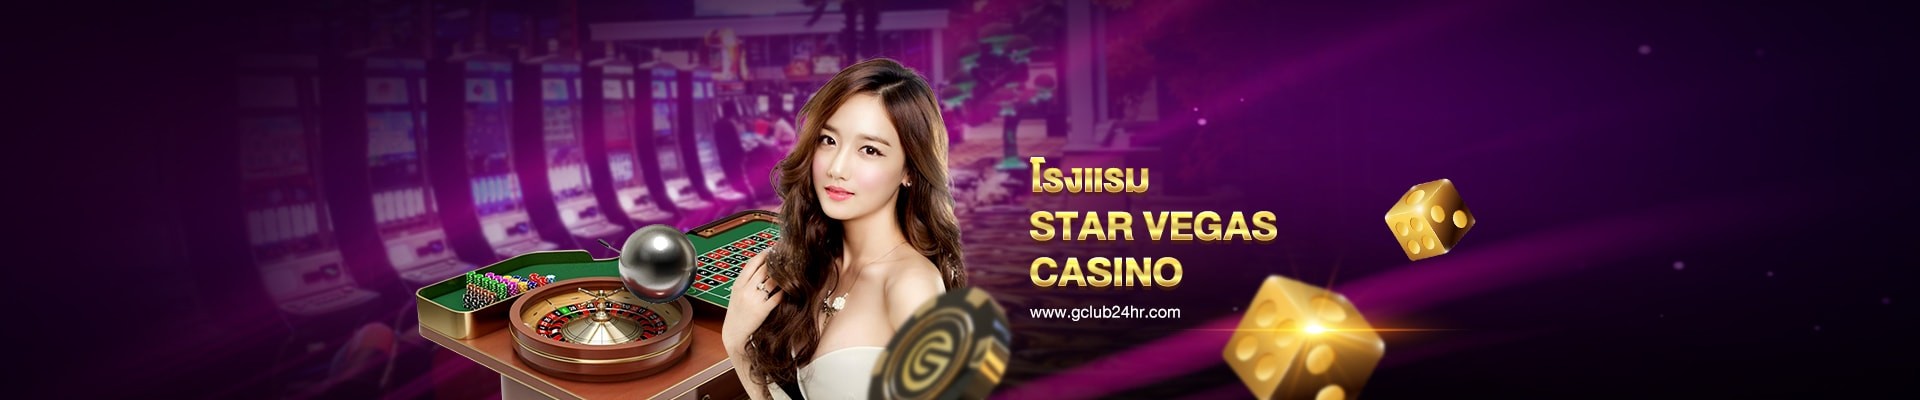 gclub24hr_casino_online_star_vegas_casino